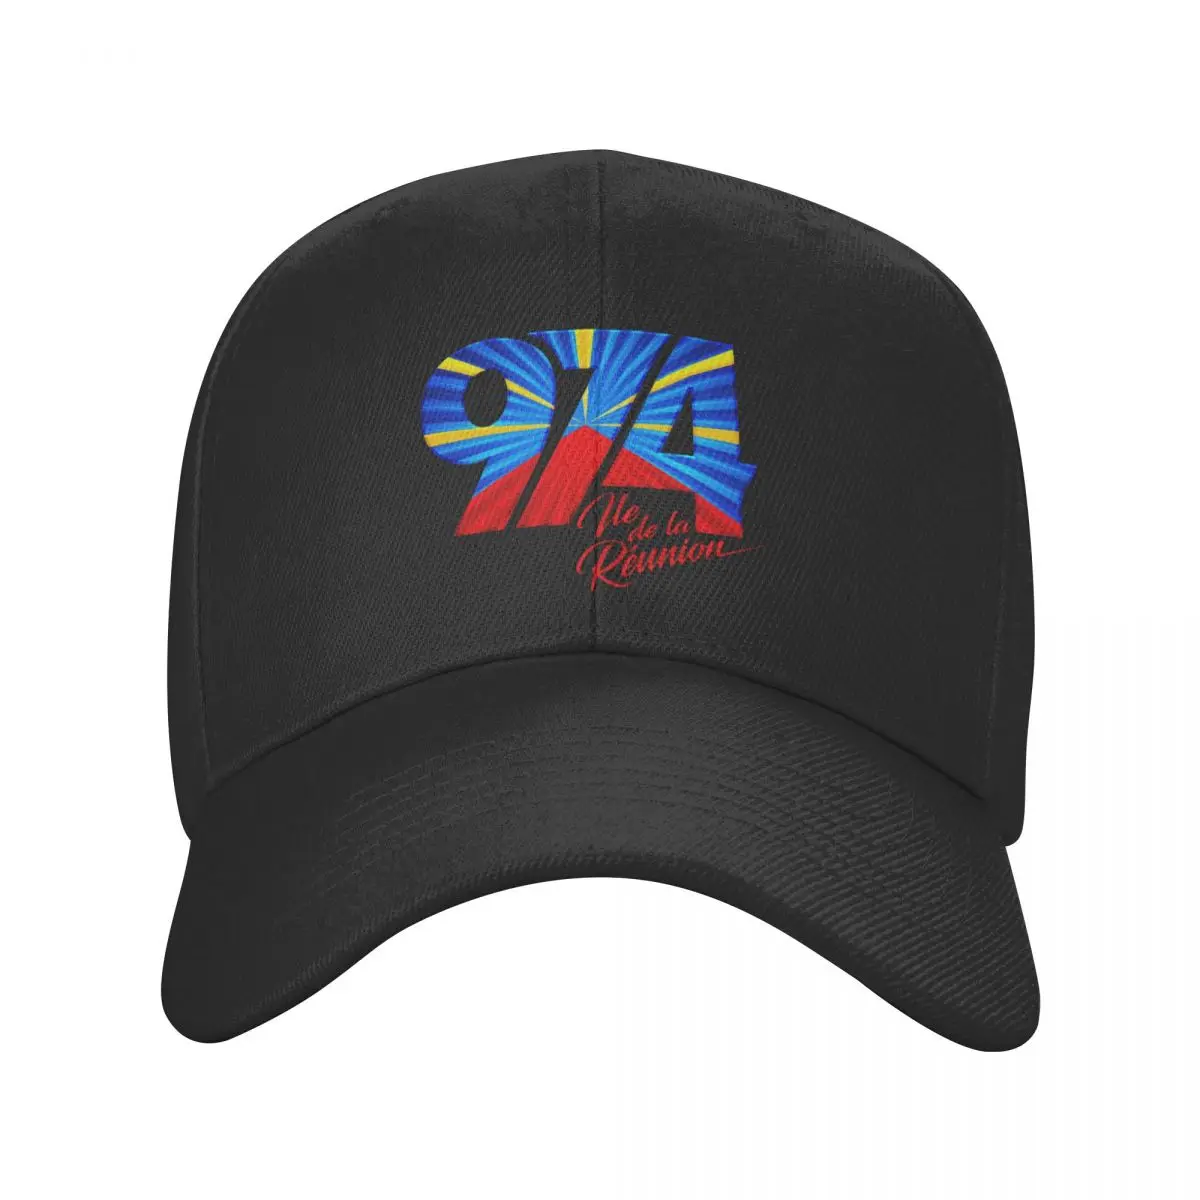 

New 974 Reunion Island Logo Baseball Cap for Men Women Adjustable Reunionese Proud Dad Hat Summer Sports Snapback Caps